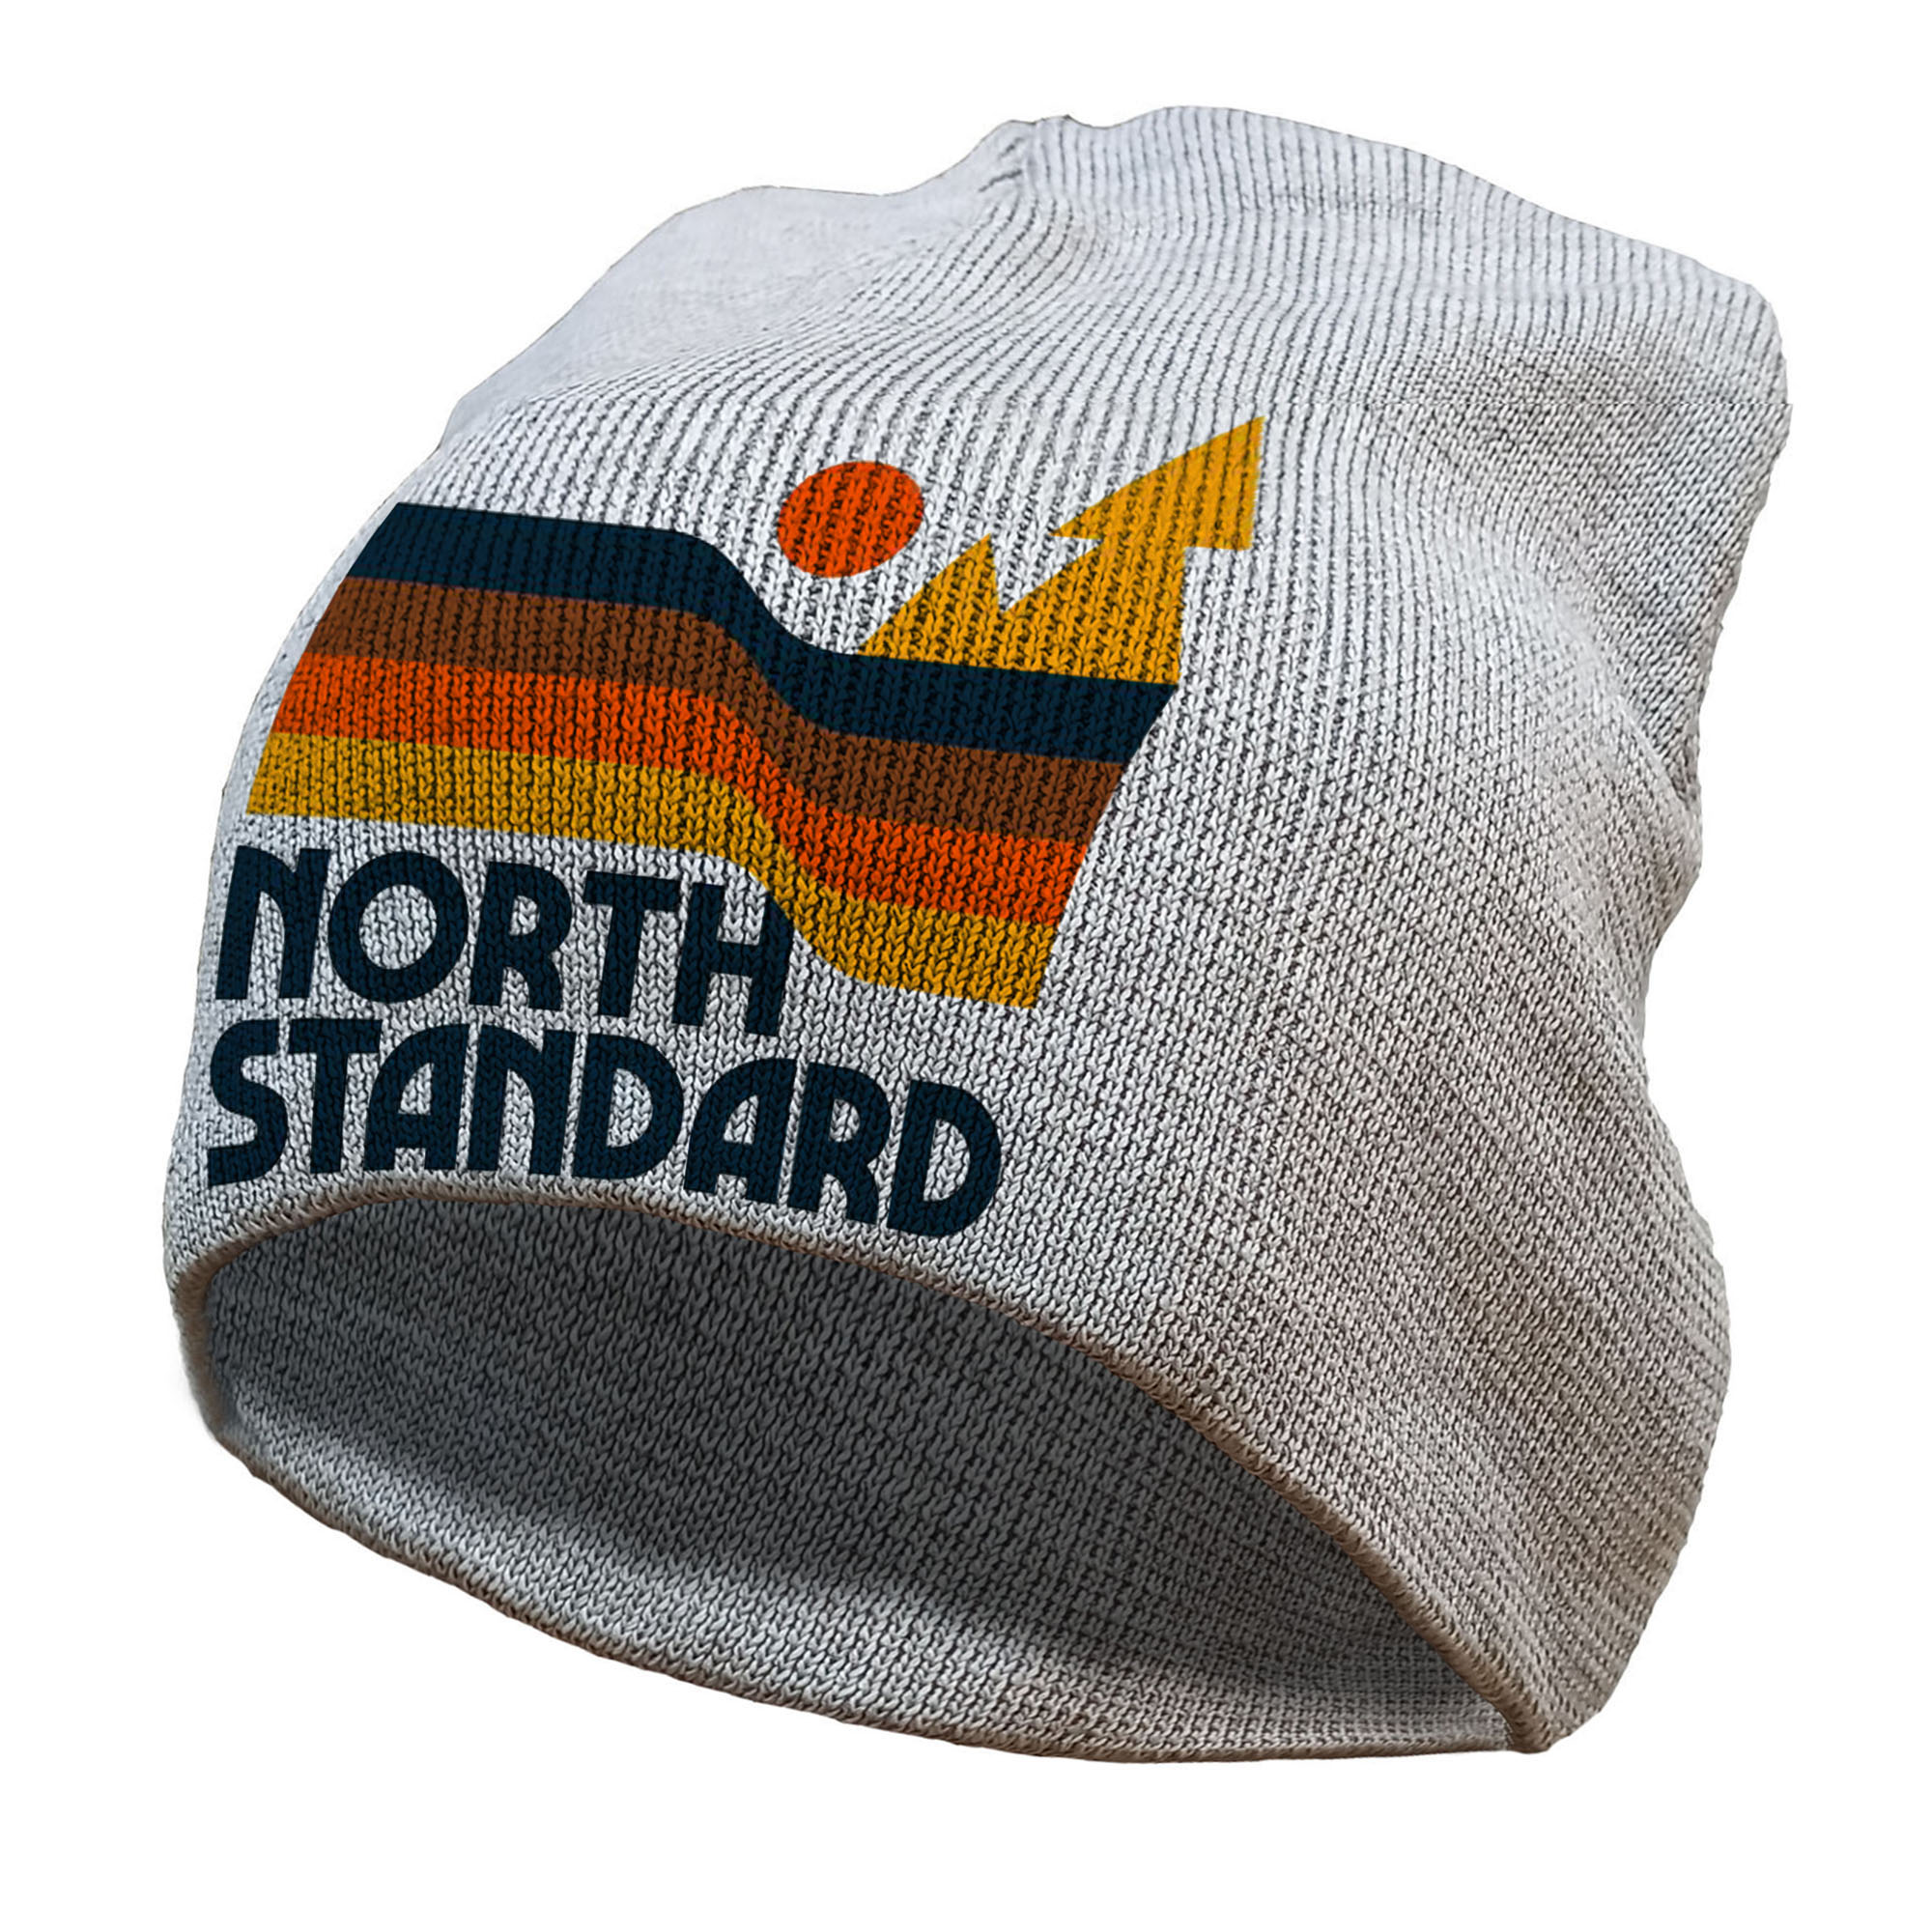 کلاه آی تمر مدل North standard کد 244